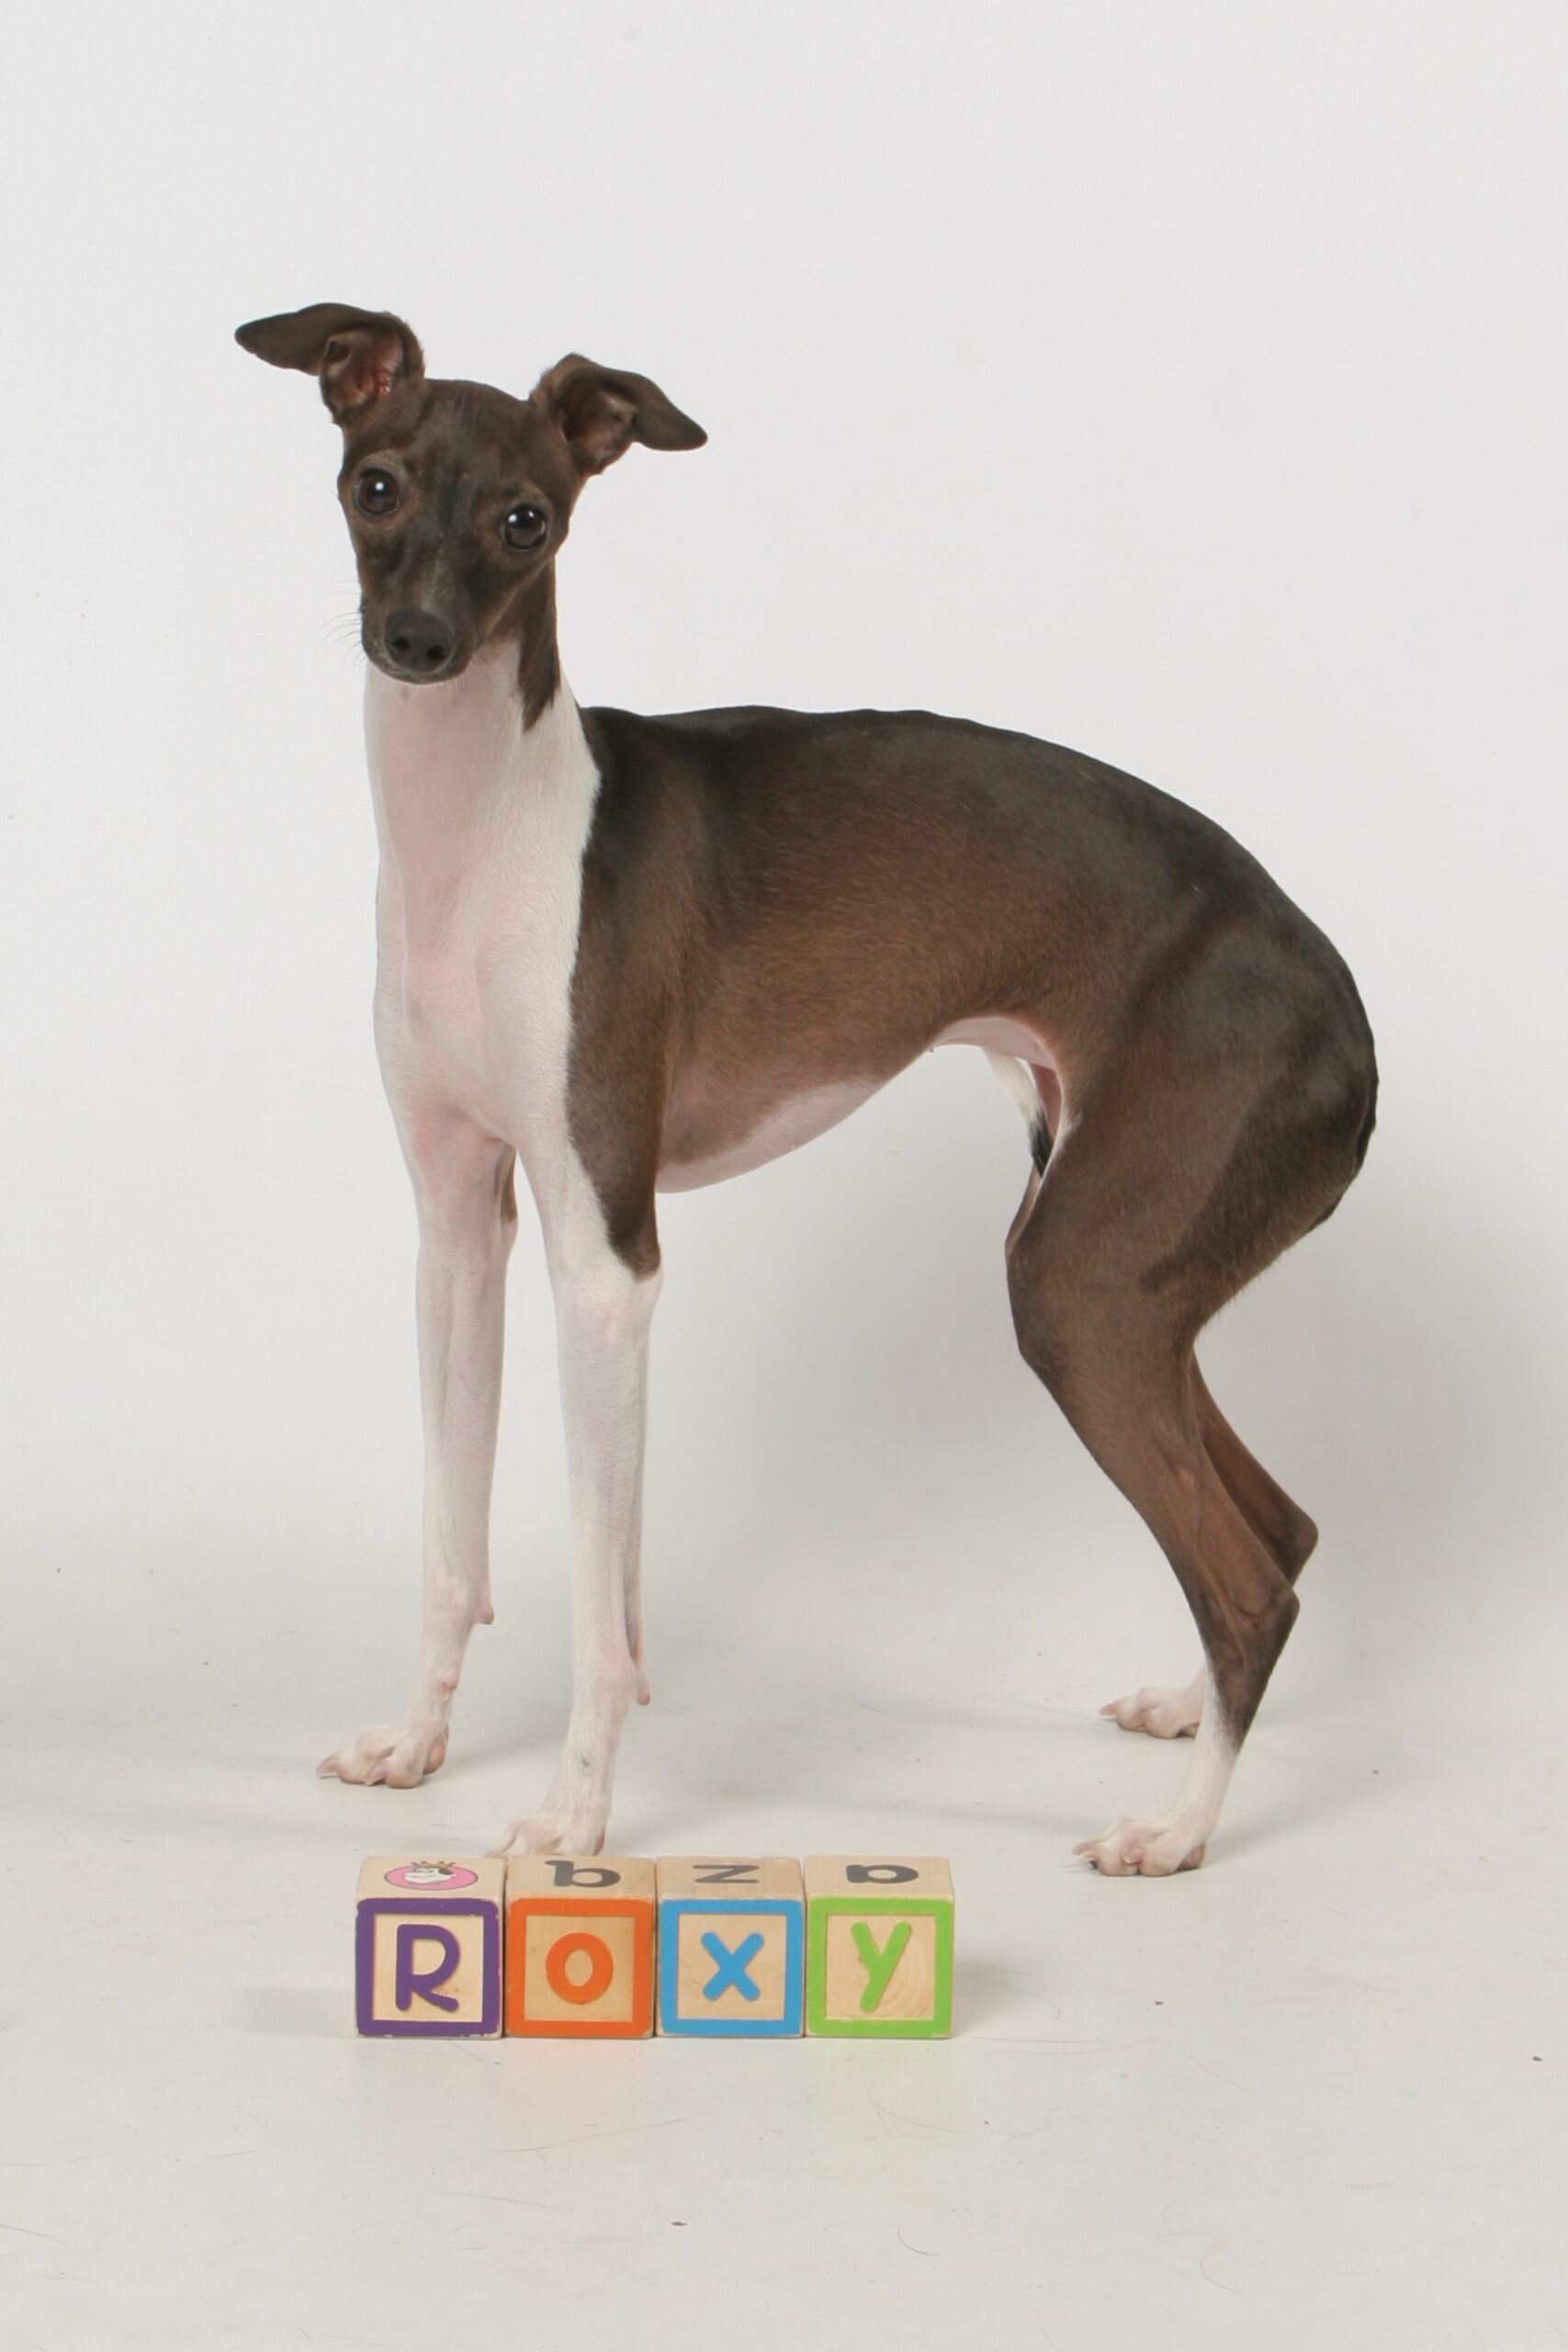 Italian Greyhound poses above name, Roxy